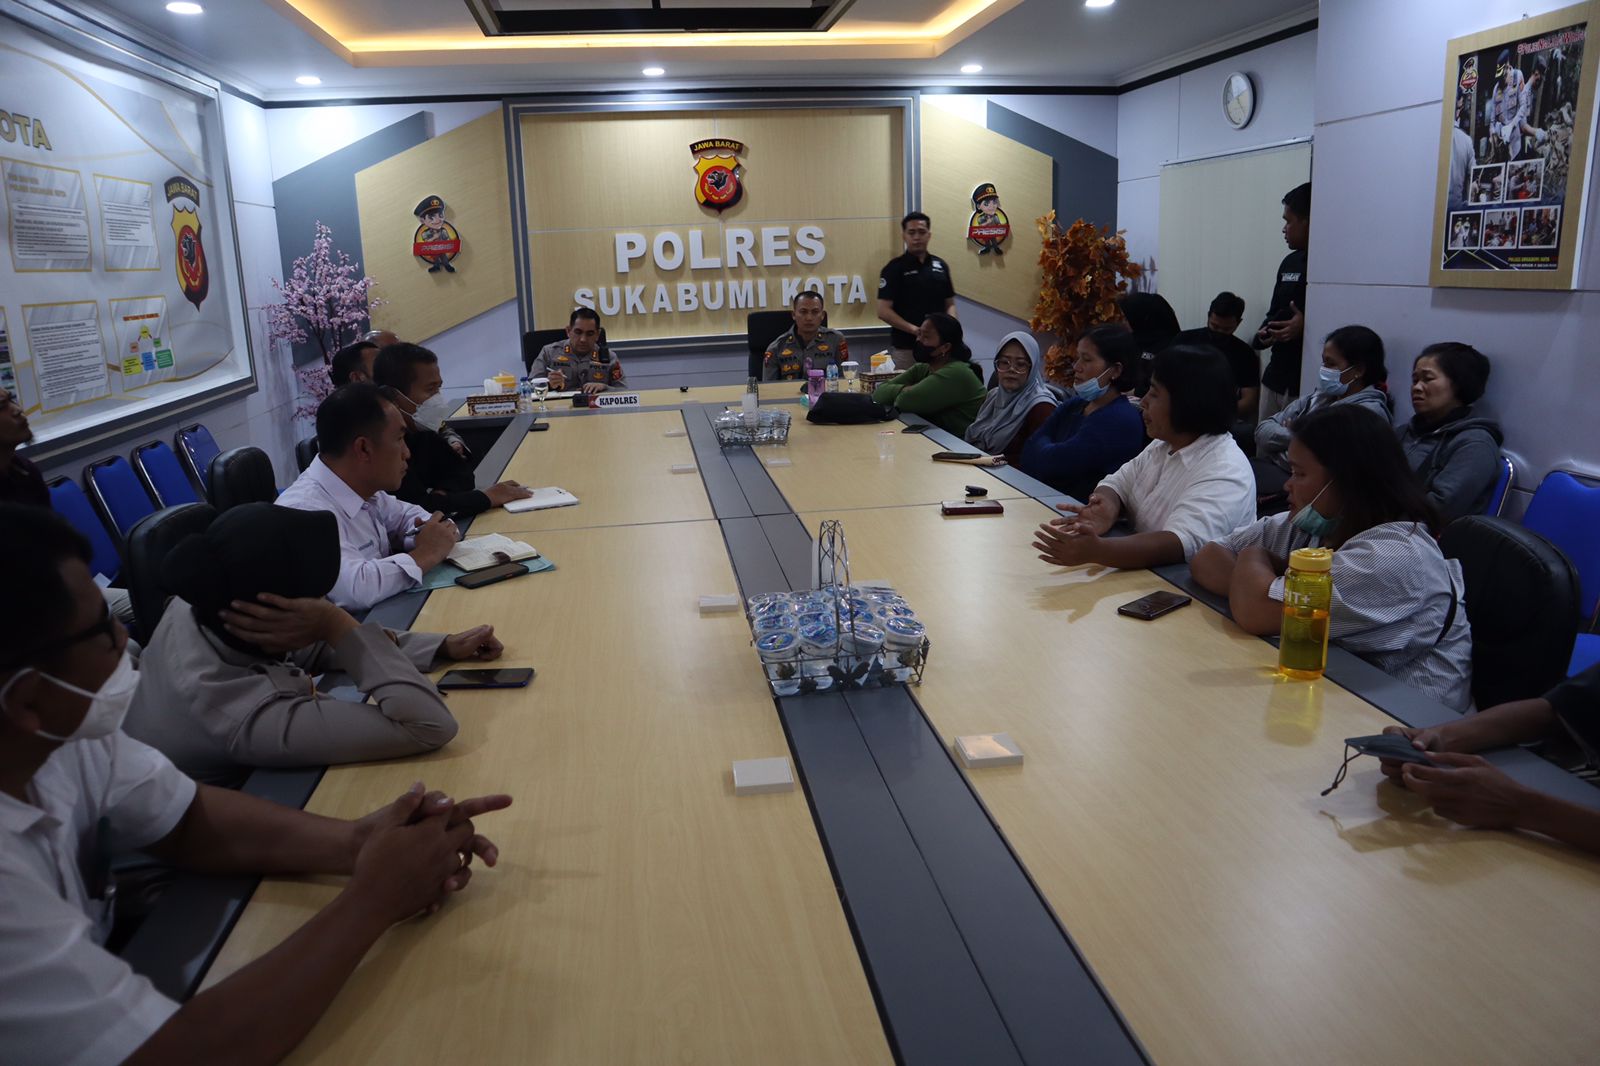 Kapolres Sukabumi Kota AKBP SY. Zainal Abidin didampingi pejabat utama menerima kunjungan sejumlah nasabah Prudential Sukabumi